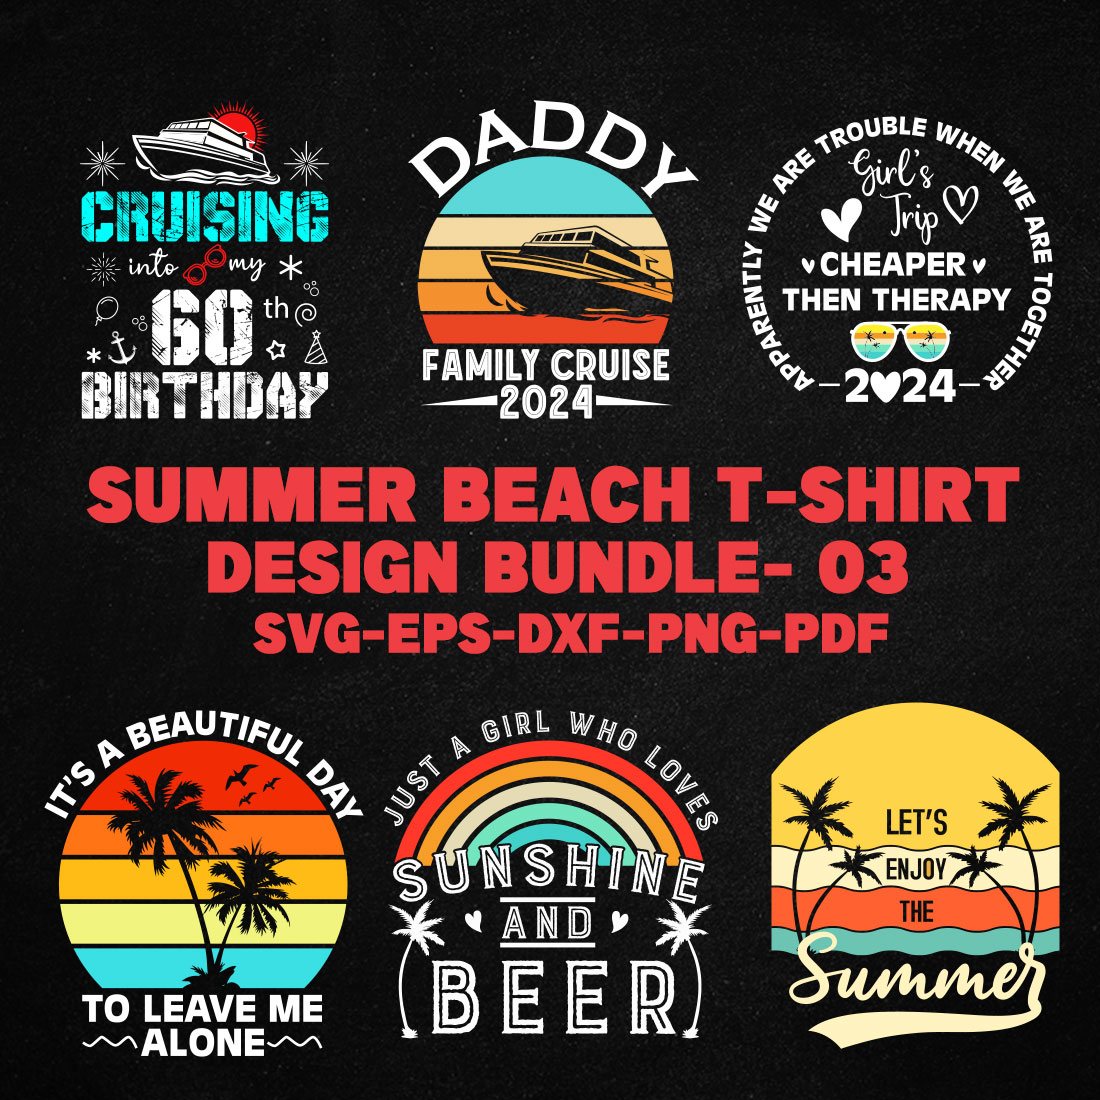 Funny Summer Beach T-shirt Design Bundle - 03 cover image.